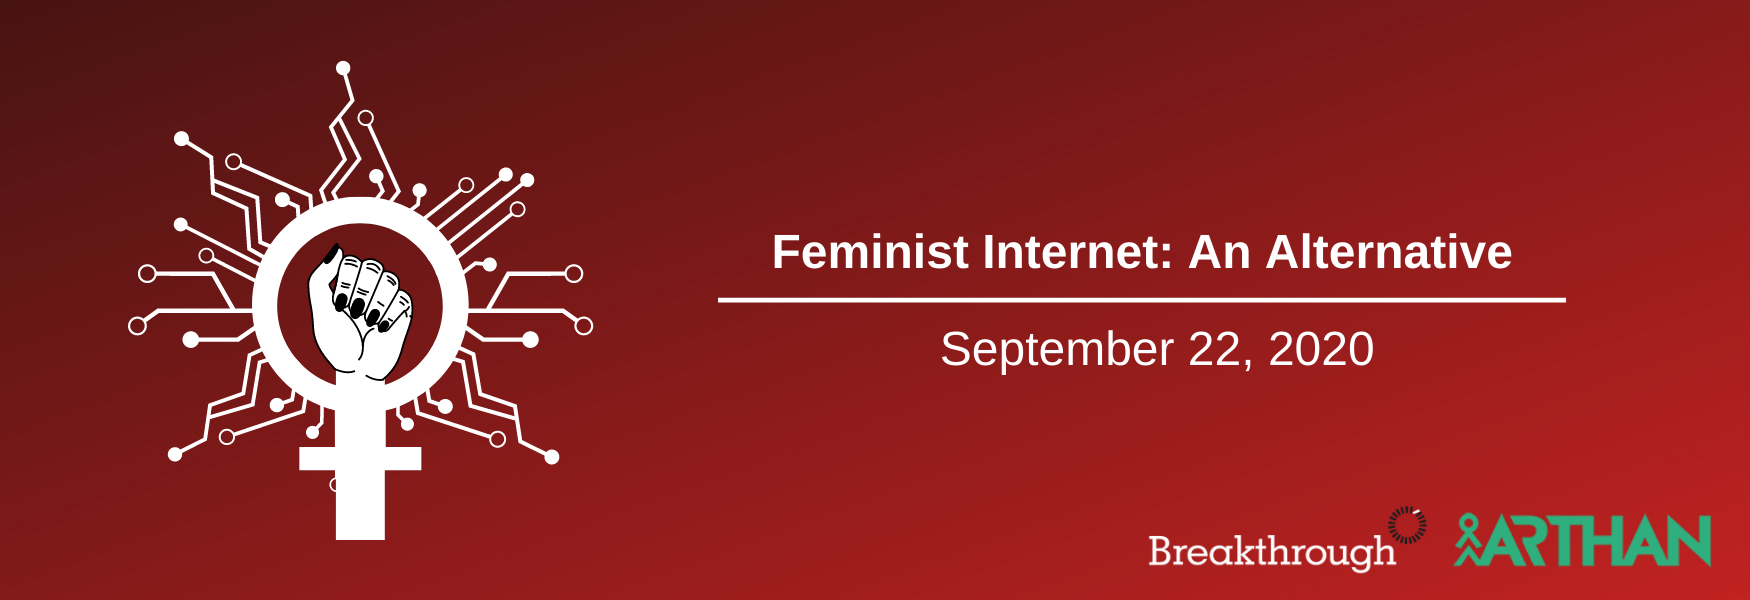 Feminist Internet - An Alternative